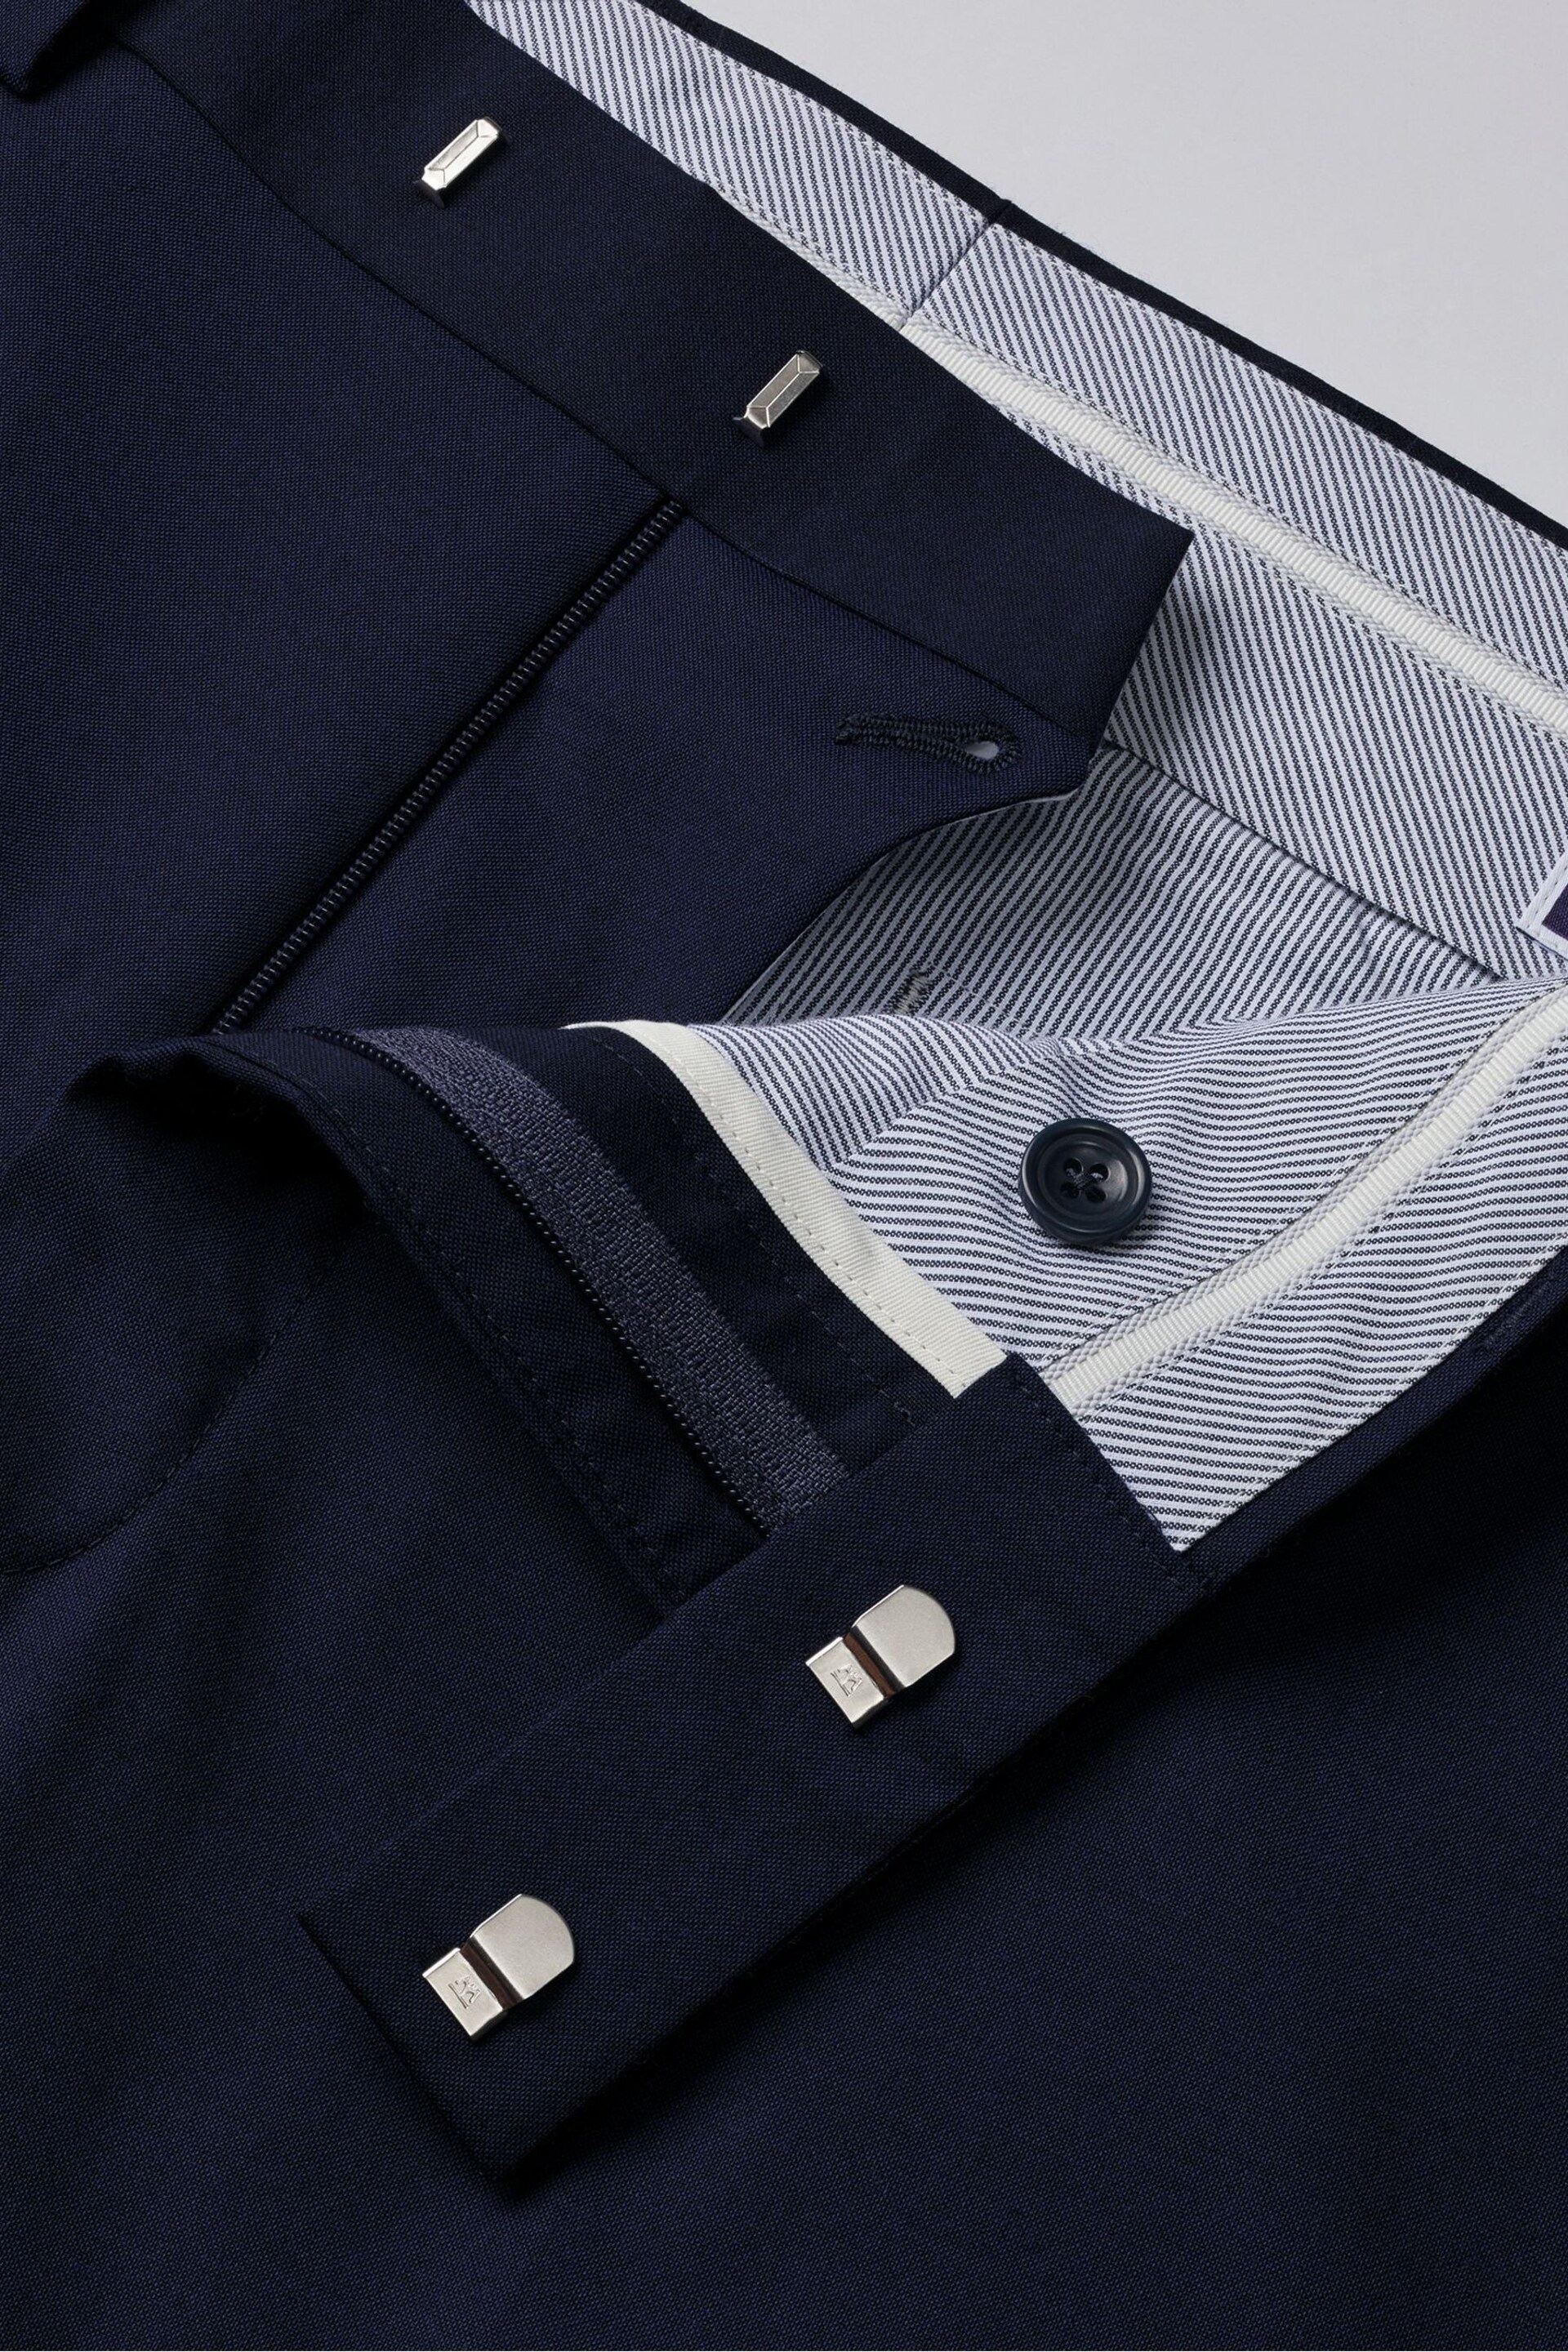 Charles Tyrwhitt Blue Slim Fit Italian Luxury Trousers - Image 4 of 4